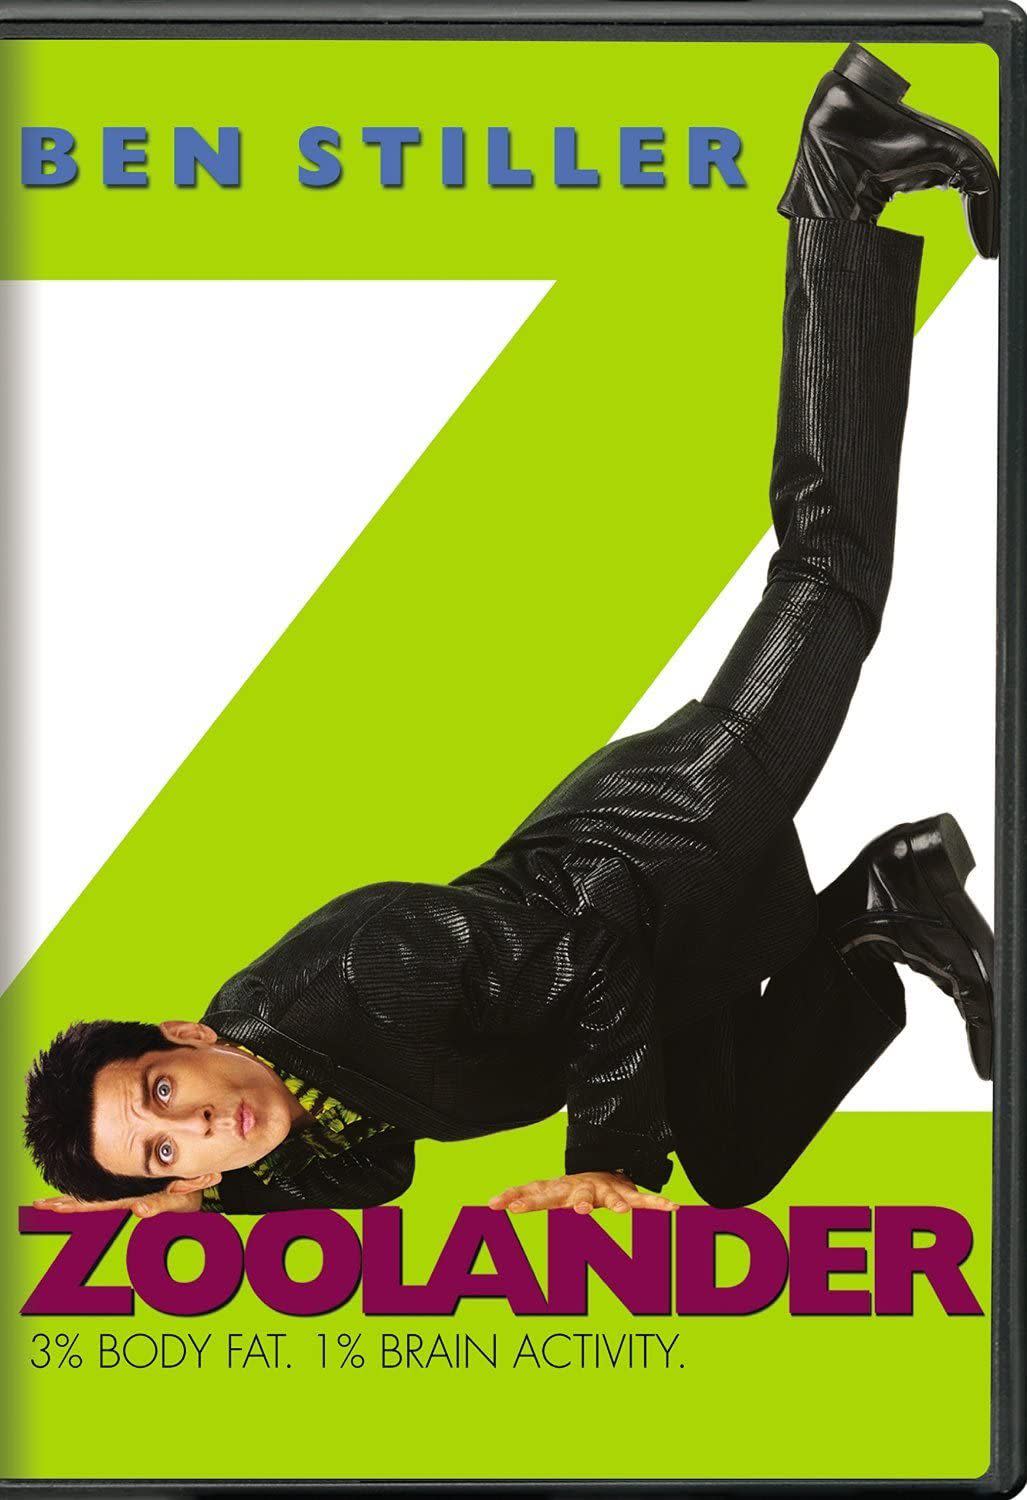 ‘Zoolander’ (2001)